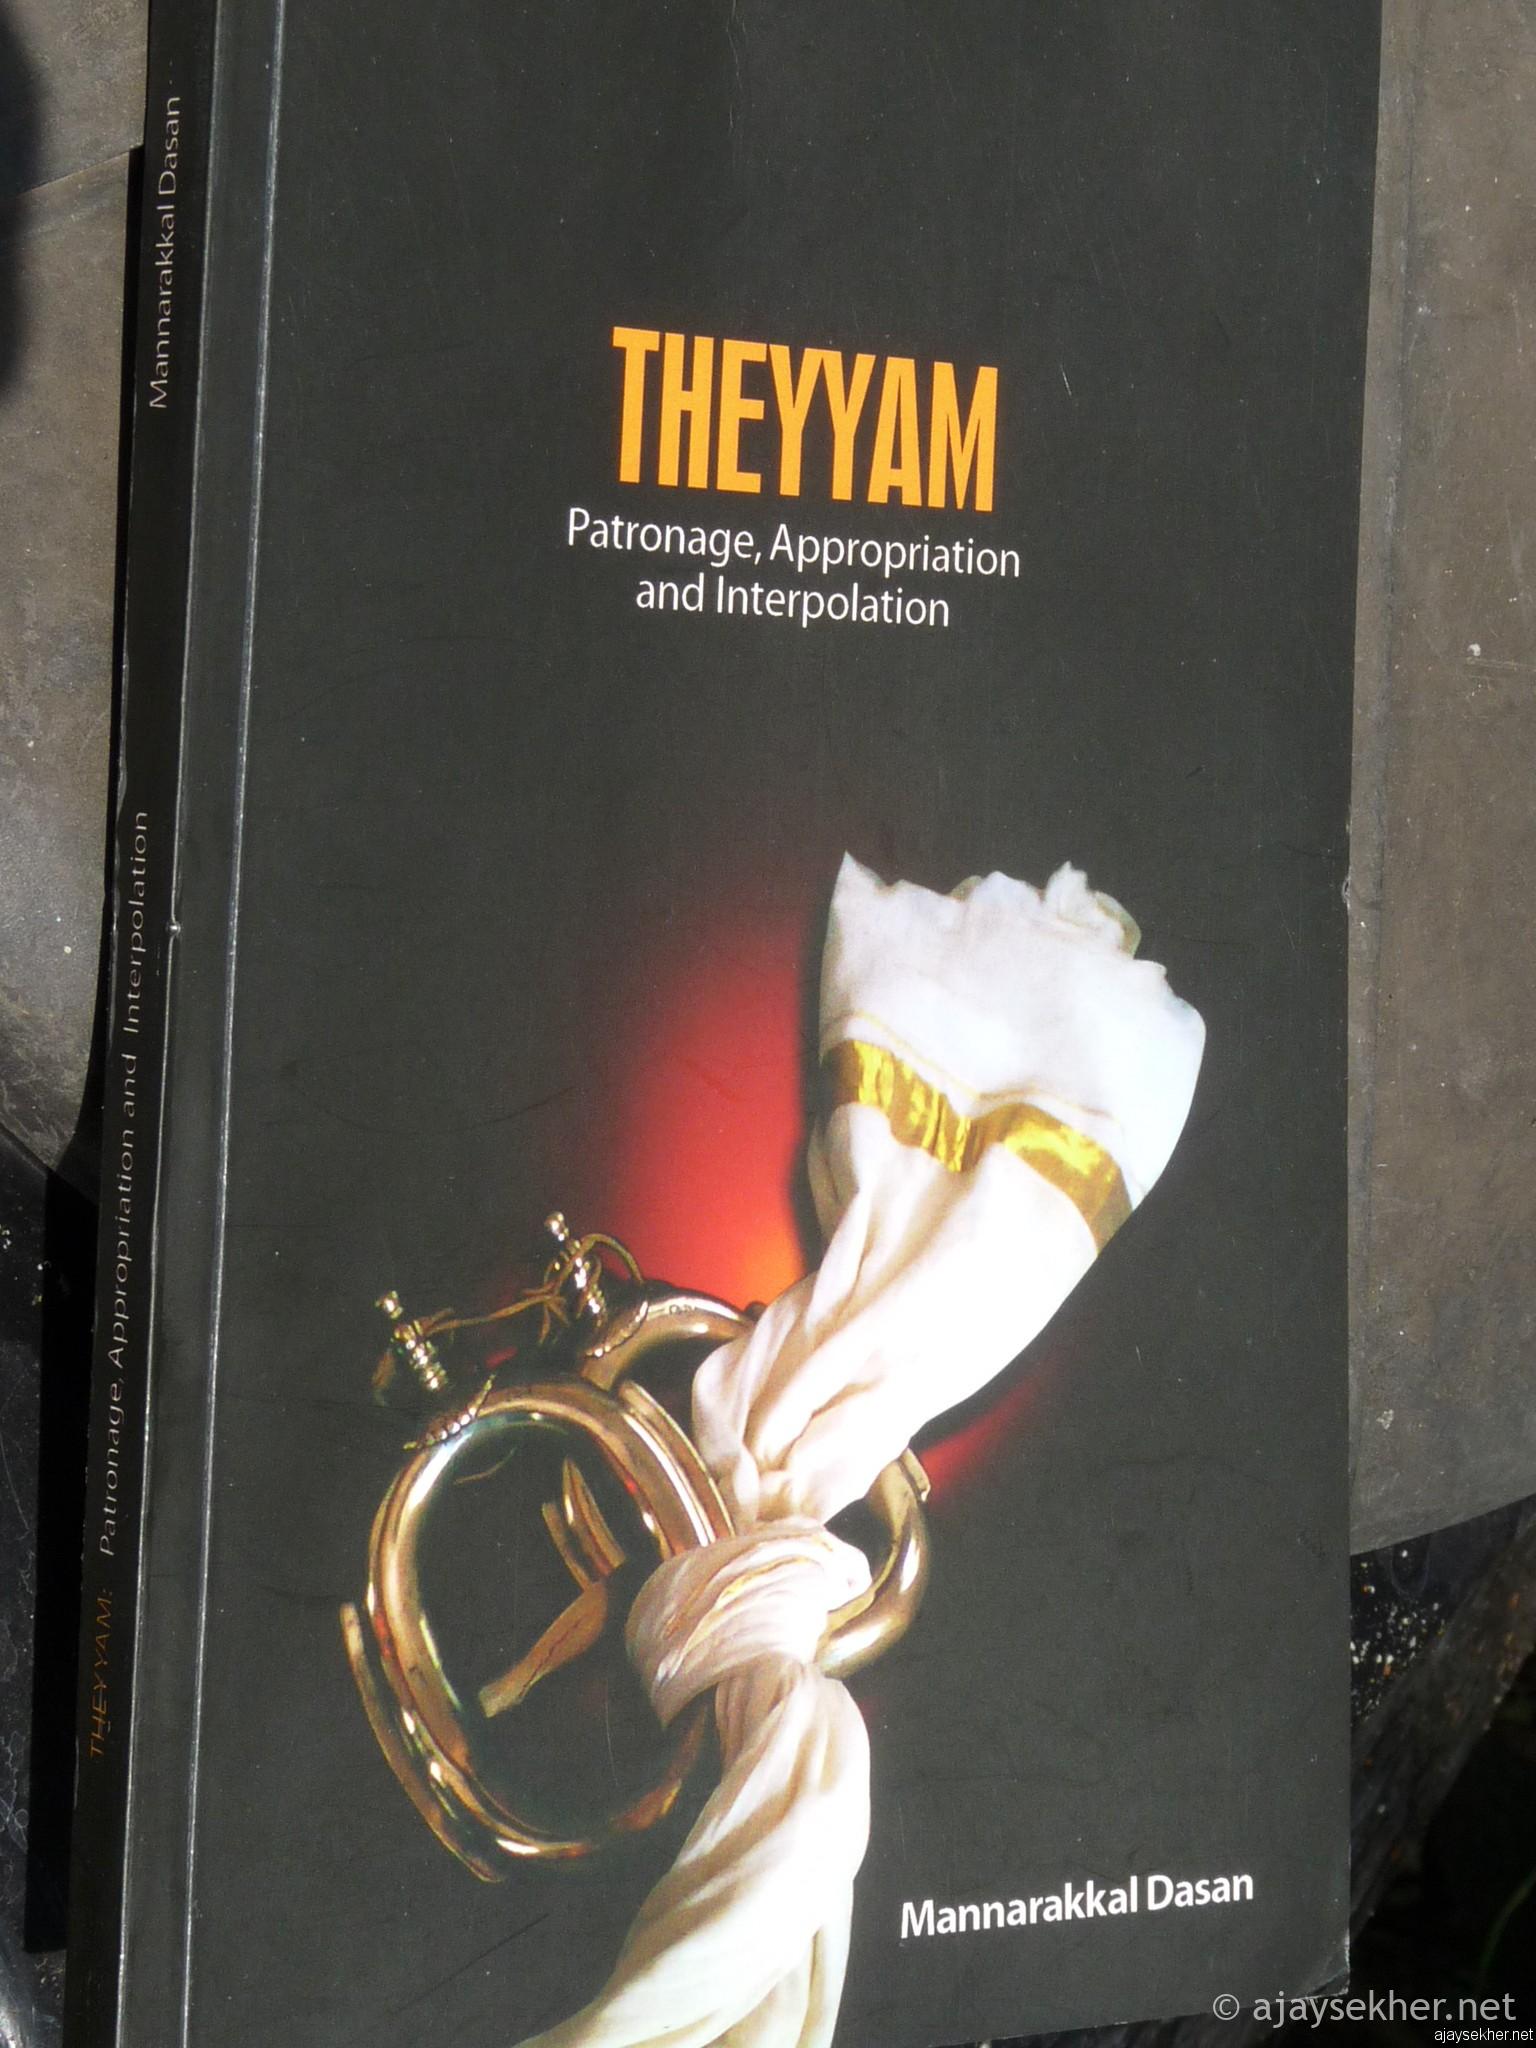 Theyyam: Patronage, Appropriation, Interpolation by M Dasan (Kannur: Kannur University, 2012).  Cover image suggestive of bondage and hegemony.